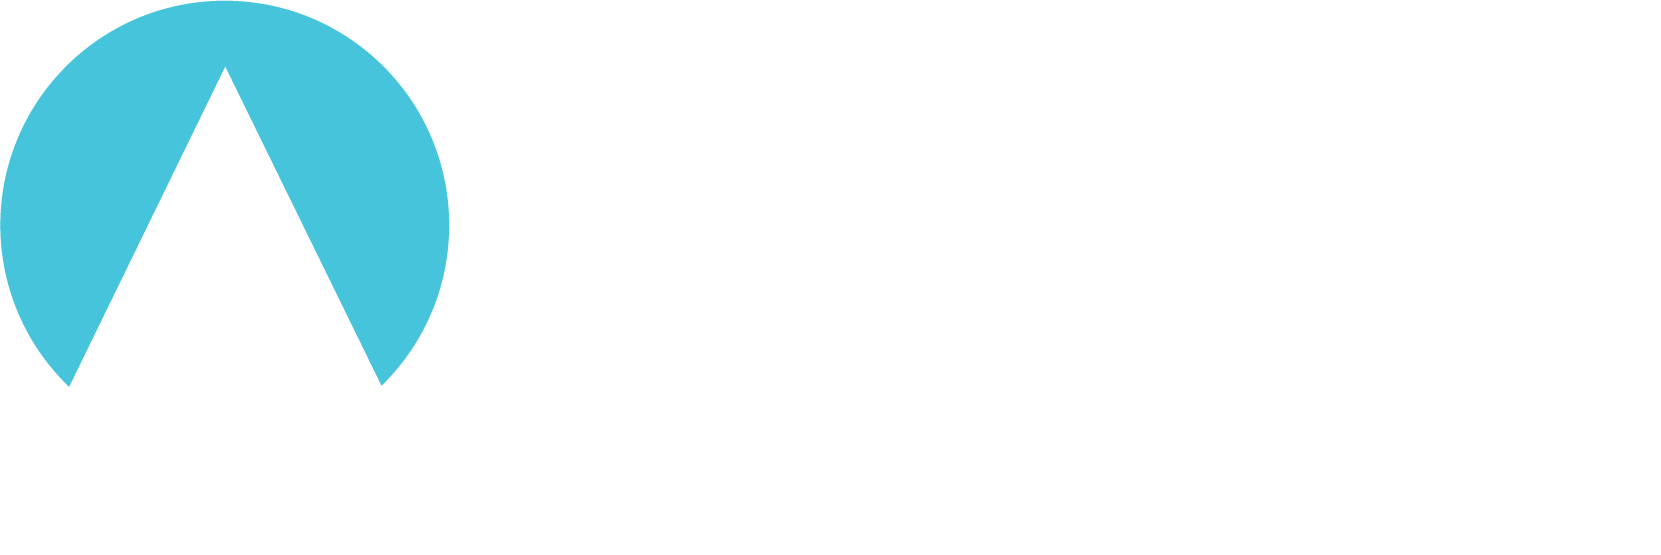 biomass producer Peak Renewables logo in white